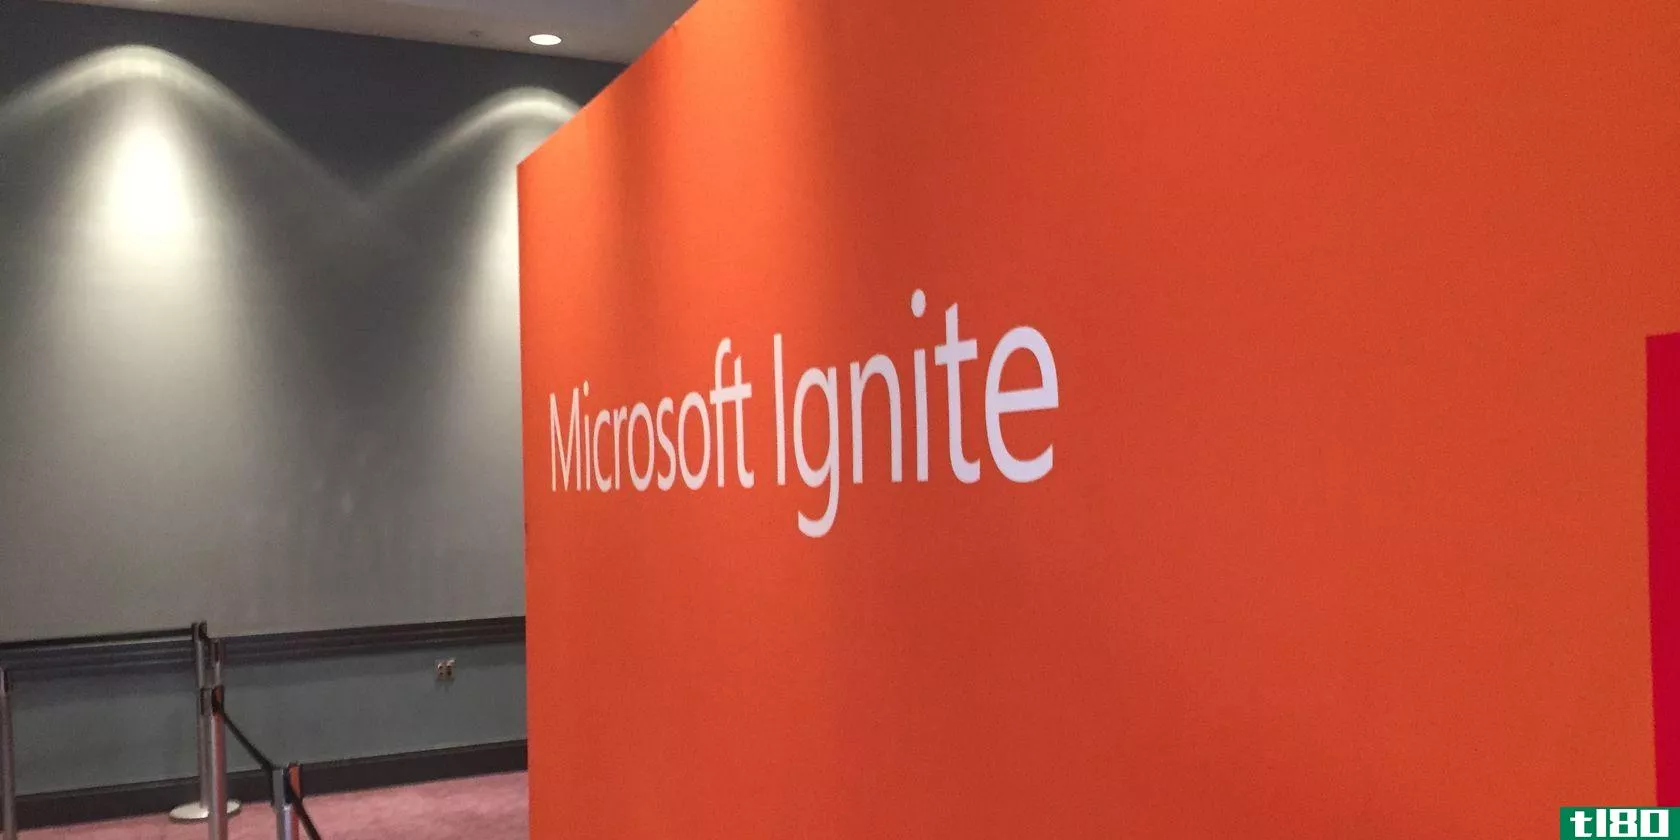 The Microsoft Ignite event logo